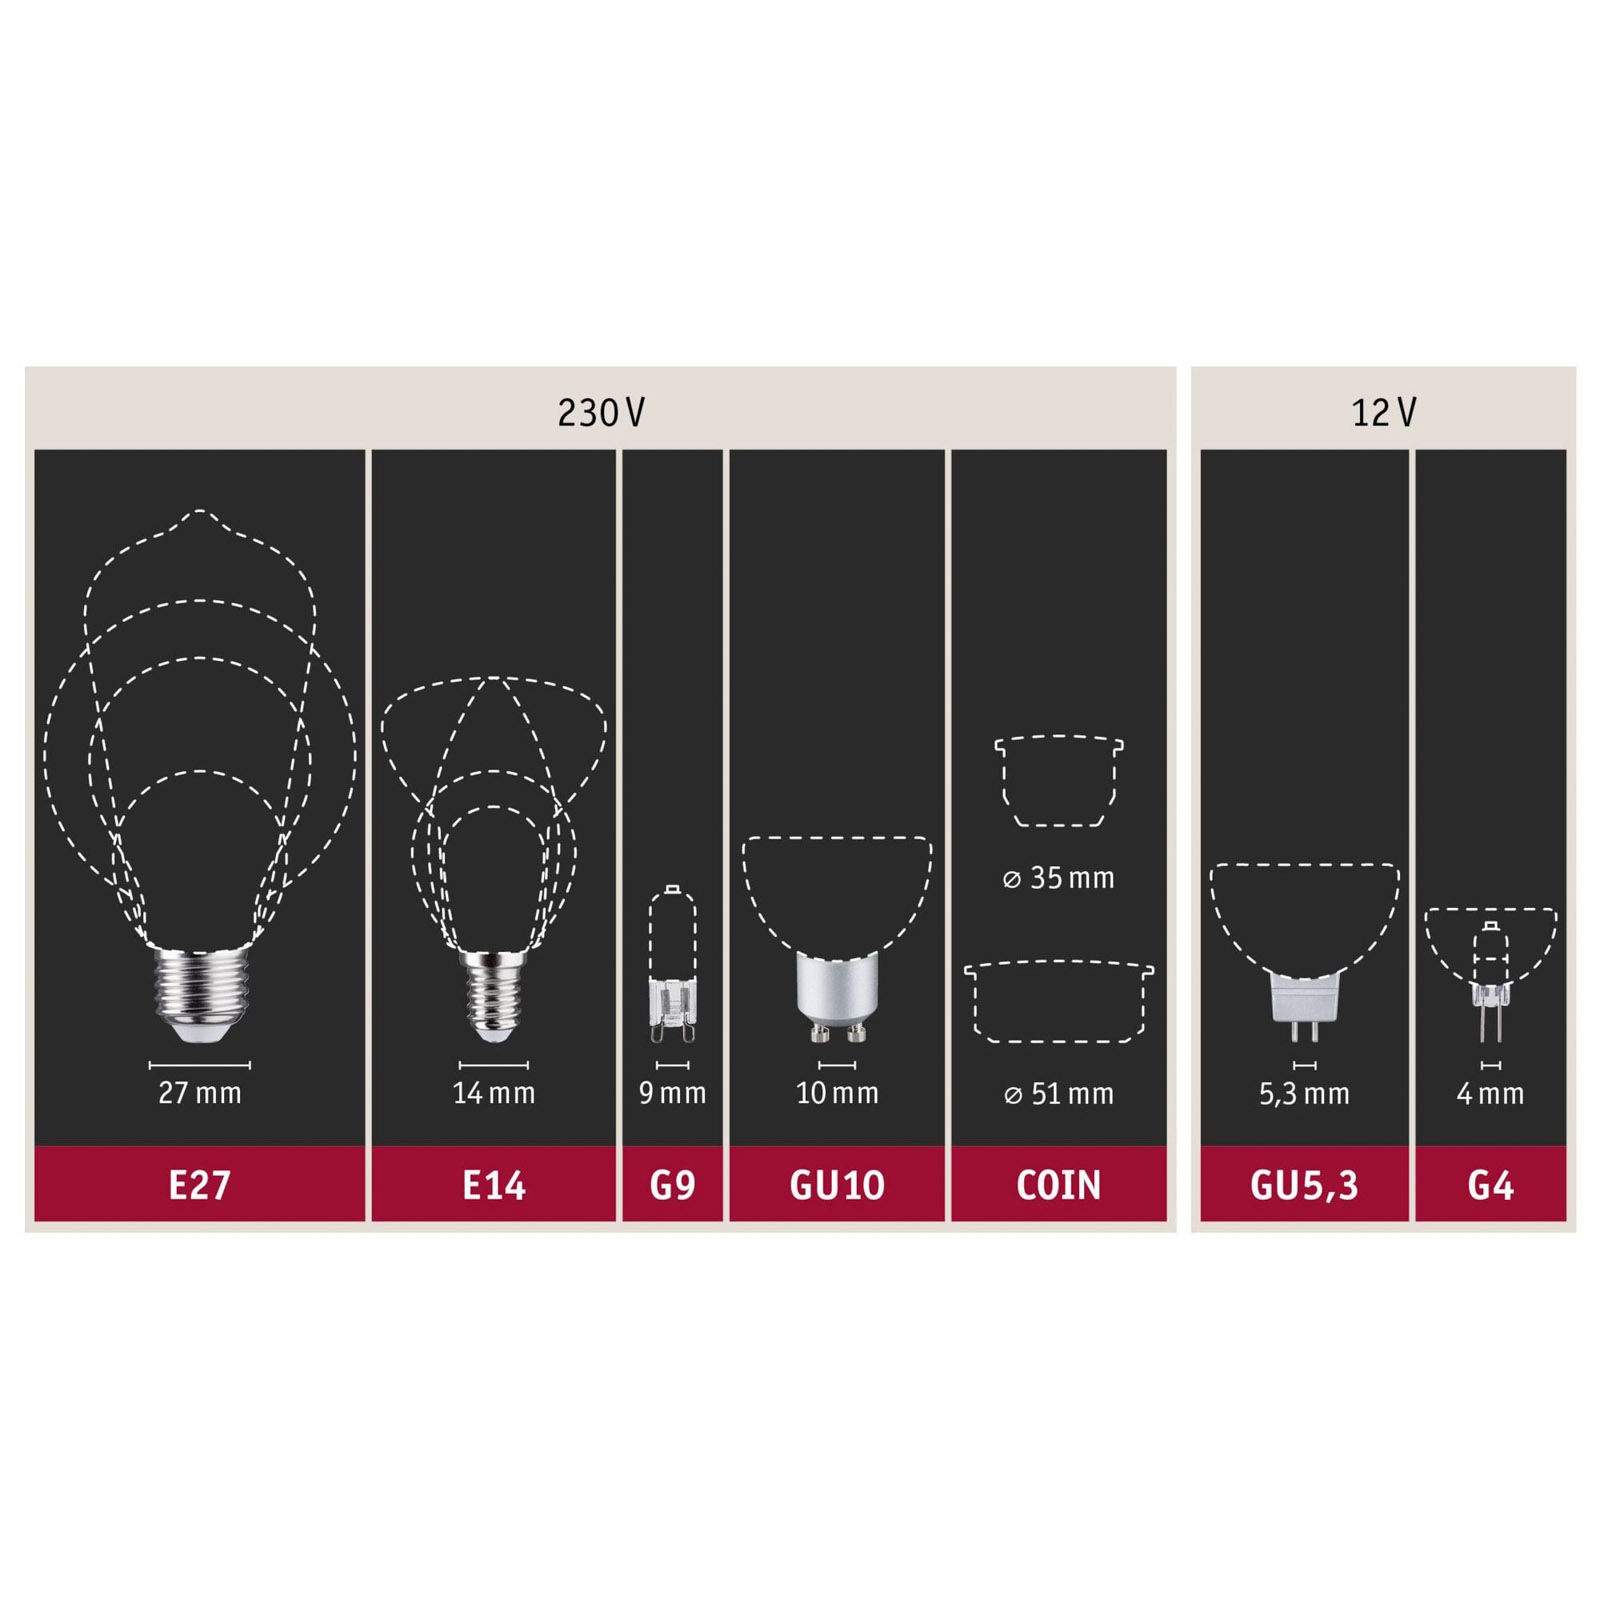 Paulmann LED-Lampe E27 Filament grün 1,1W